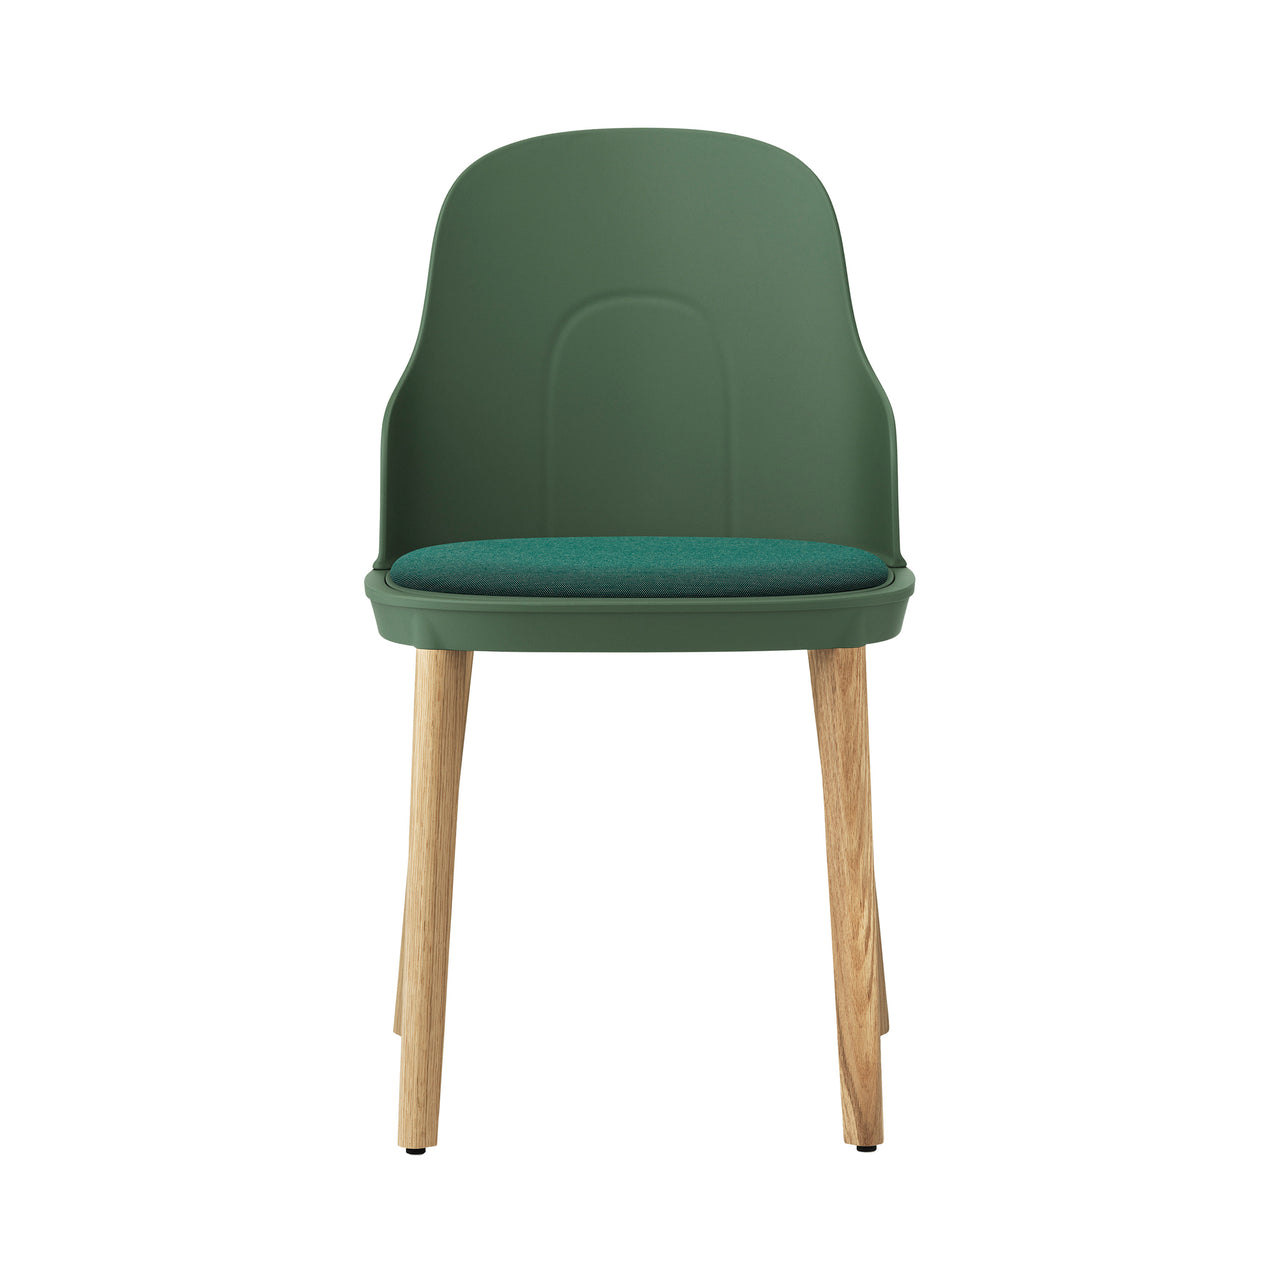 Allez Chair: Upholstered + Park Green + Oak